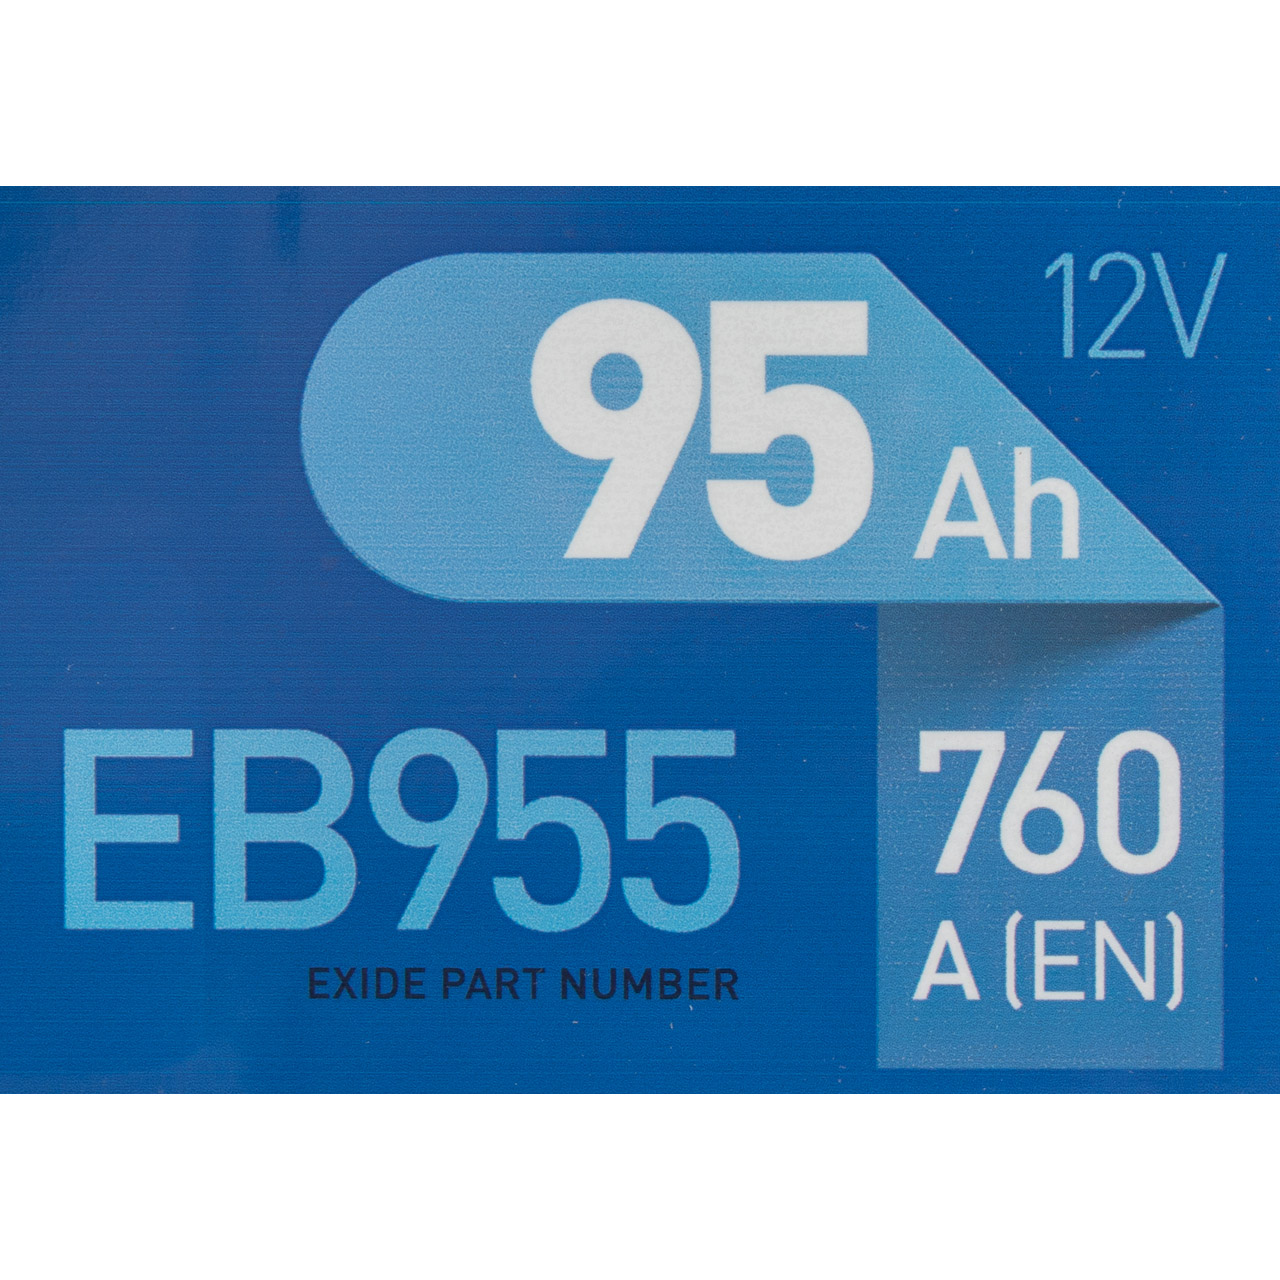 EXIDE EB955 EXCELL Autobatterie Batterie Starterbatterie 12V 95Ah EN760A